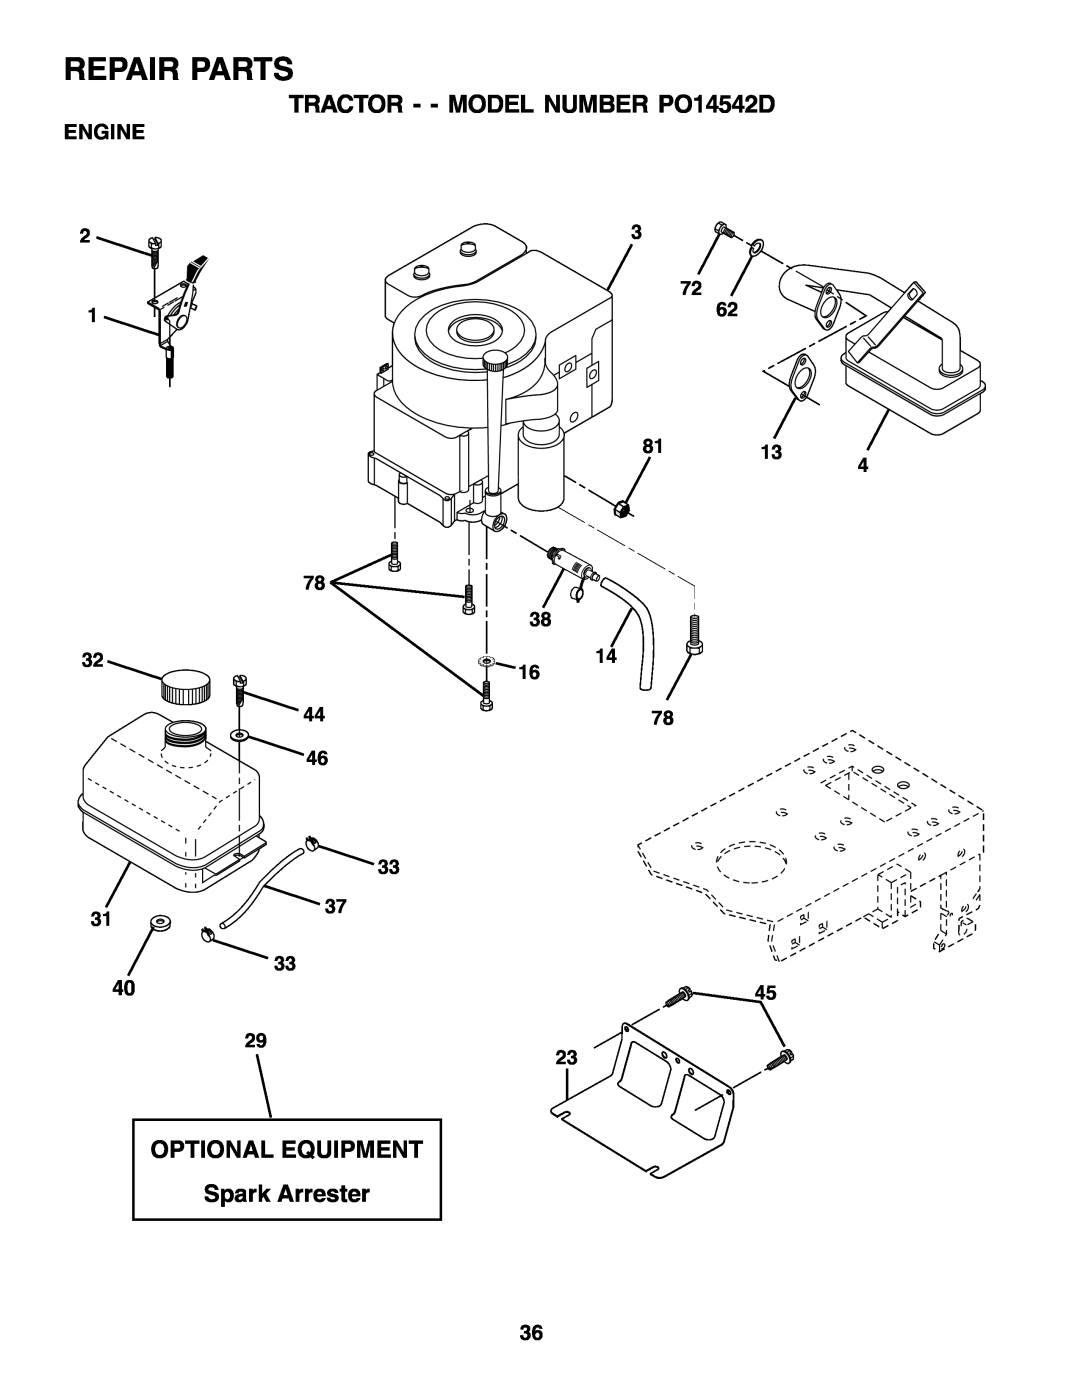 Poulan 179416 manual Repair Parts, TRACTOR - - MODEL NUMBER PO14542D, OPTIONAL EQUIPMENT Spark Arrester, Engine 